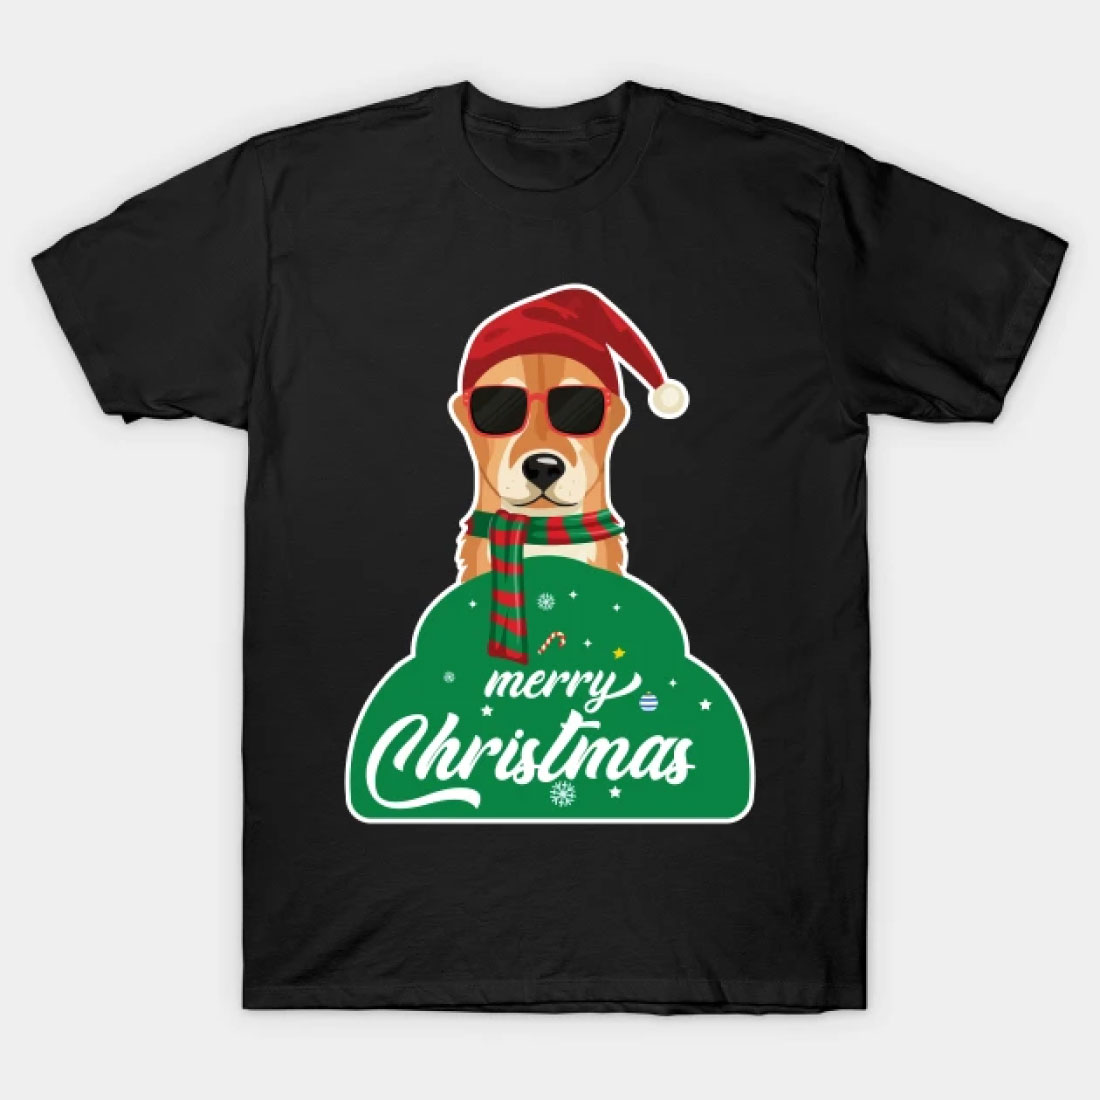 5 Merry Christmas T-Shirt Designs Bundle cover image.